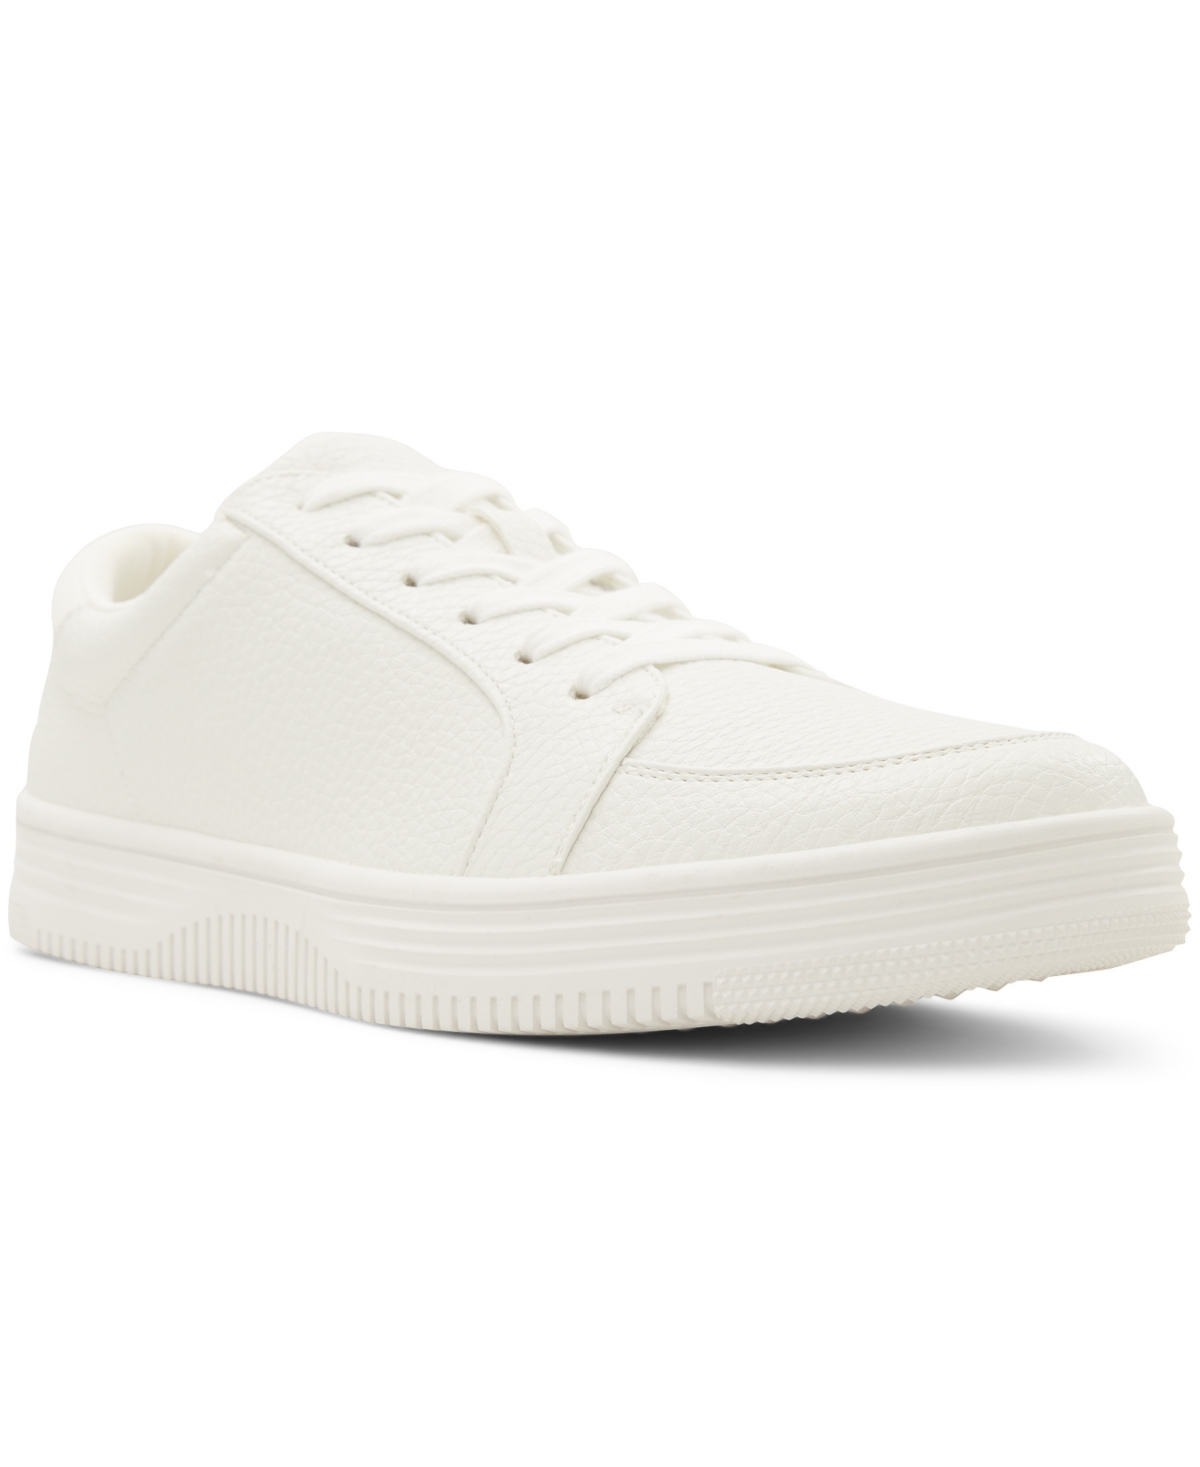 Men's Corbain Low Top Sneakers - White